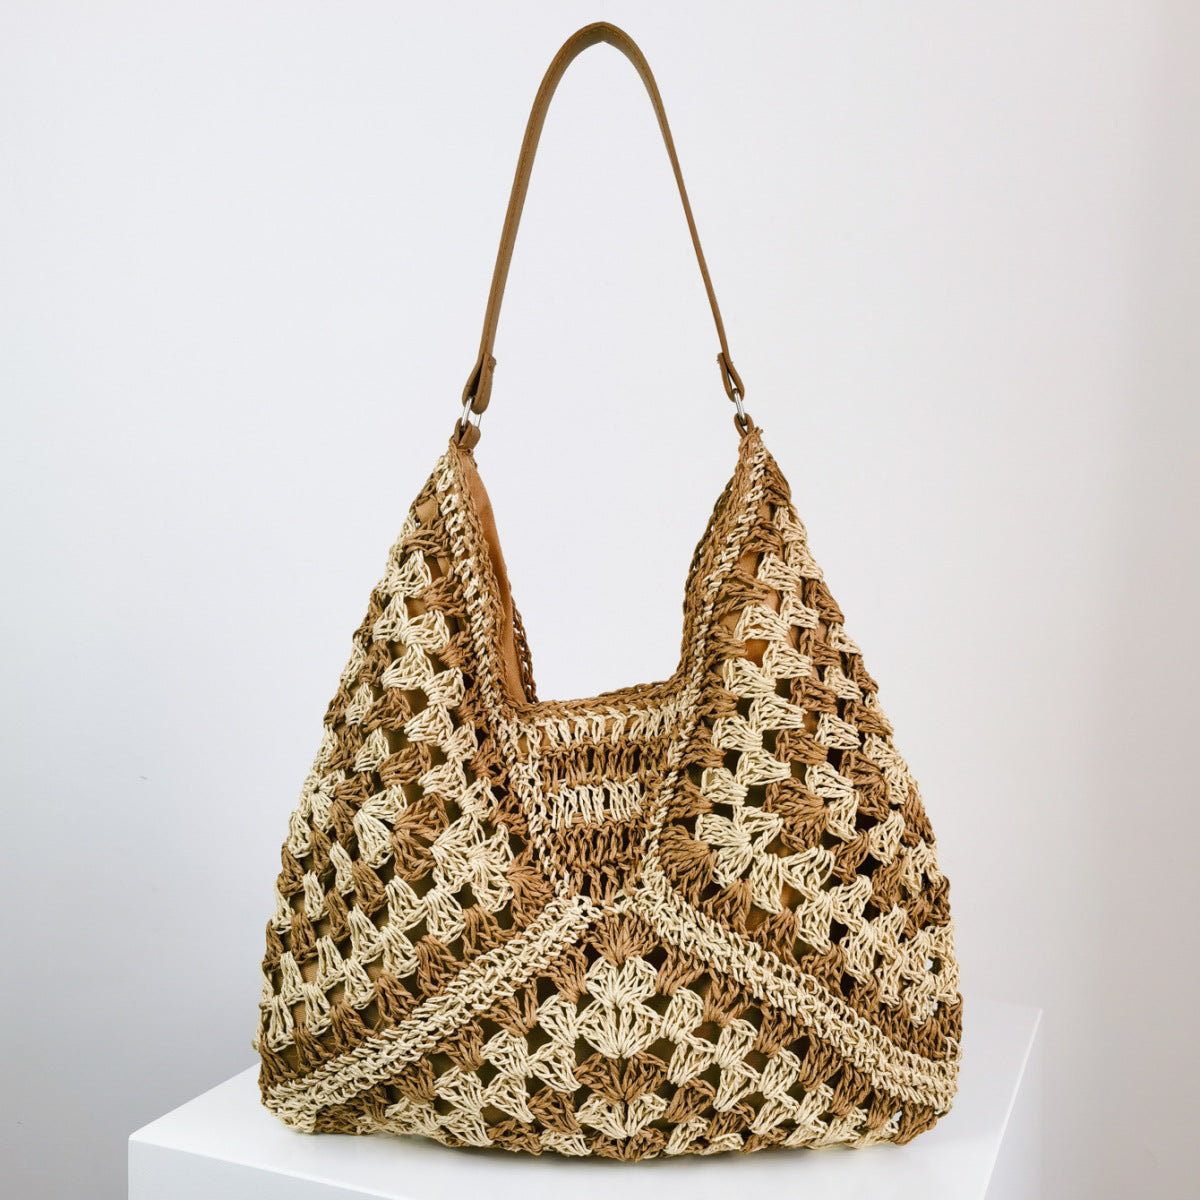 Women's Handmade Straw Woven Hollow Contrast Color Weave Shoulder Bag